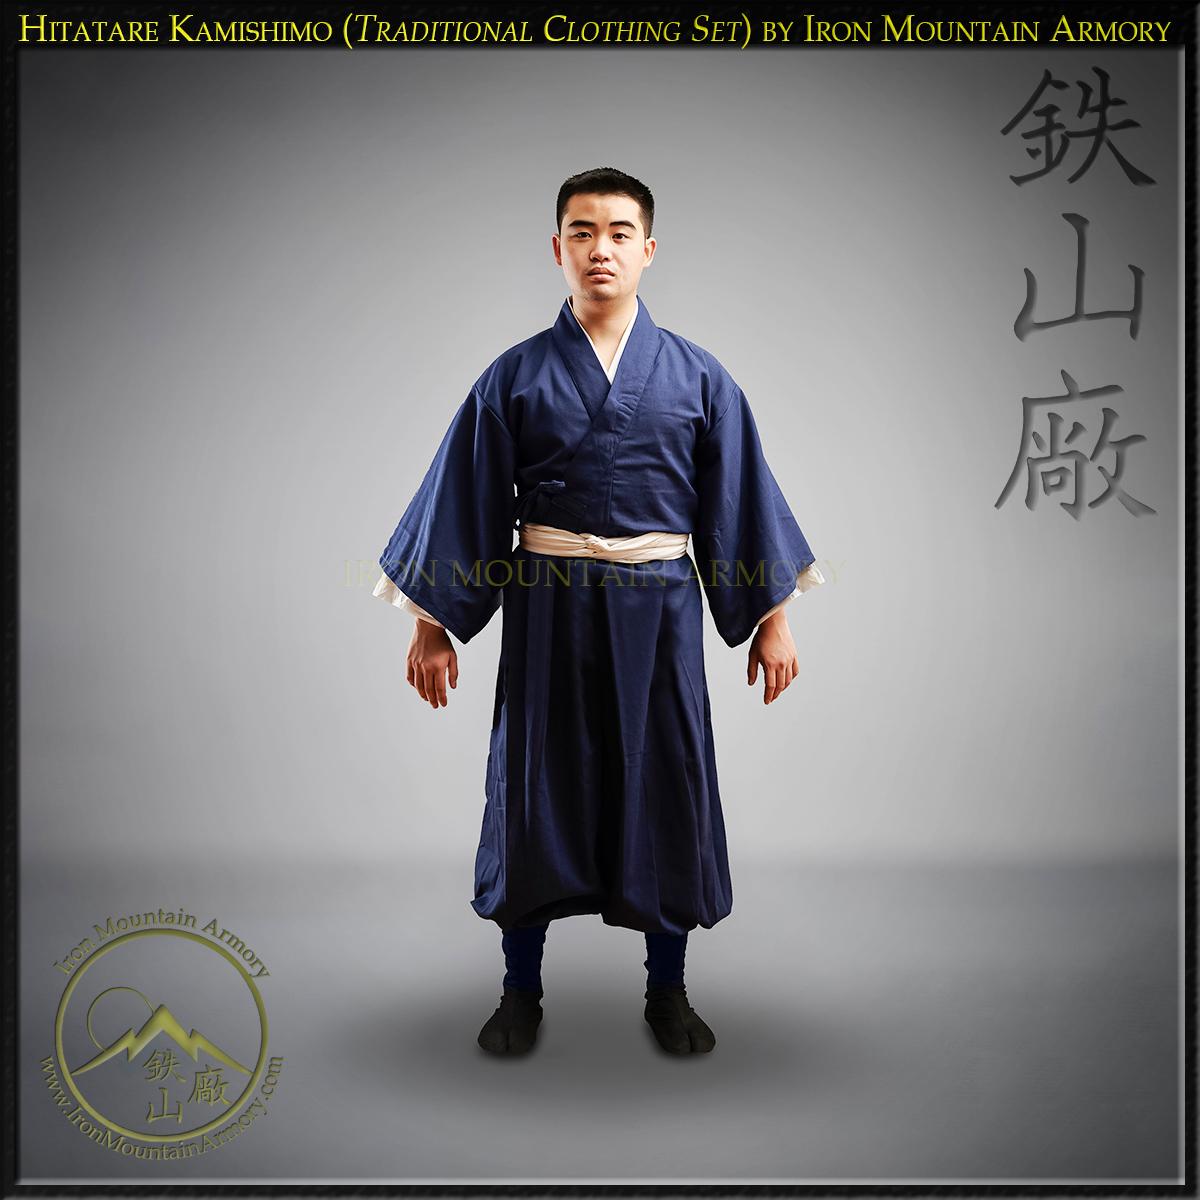 Hitatare Kamishimo: Traditional Japanese Clothing Online Store